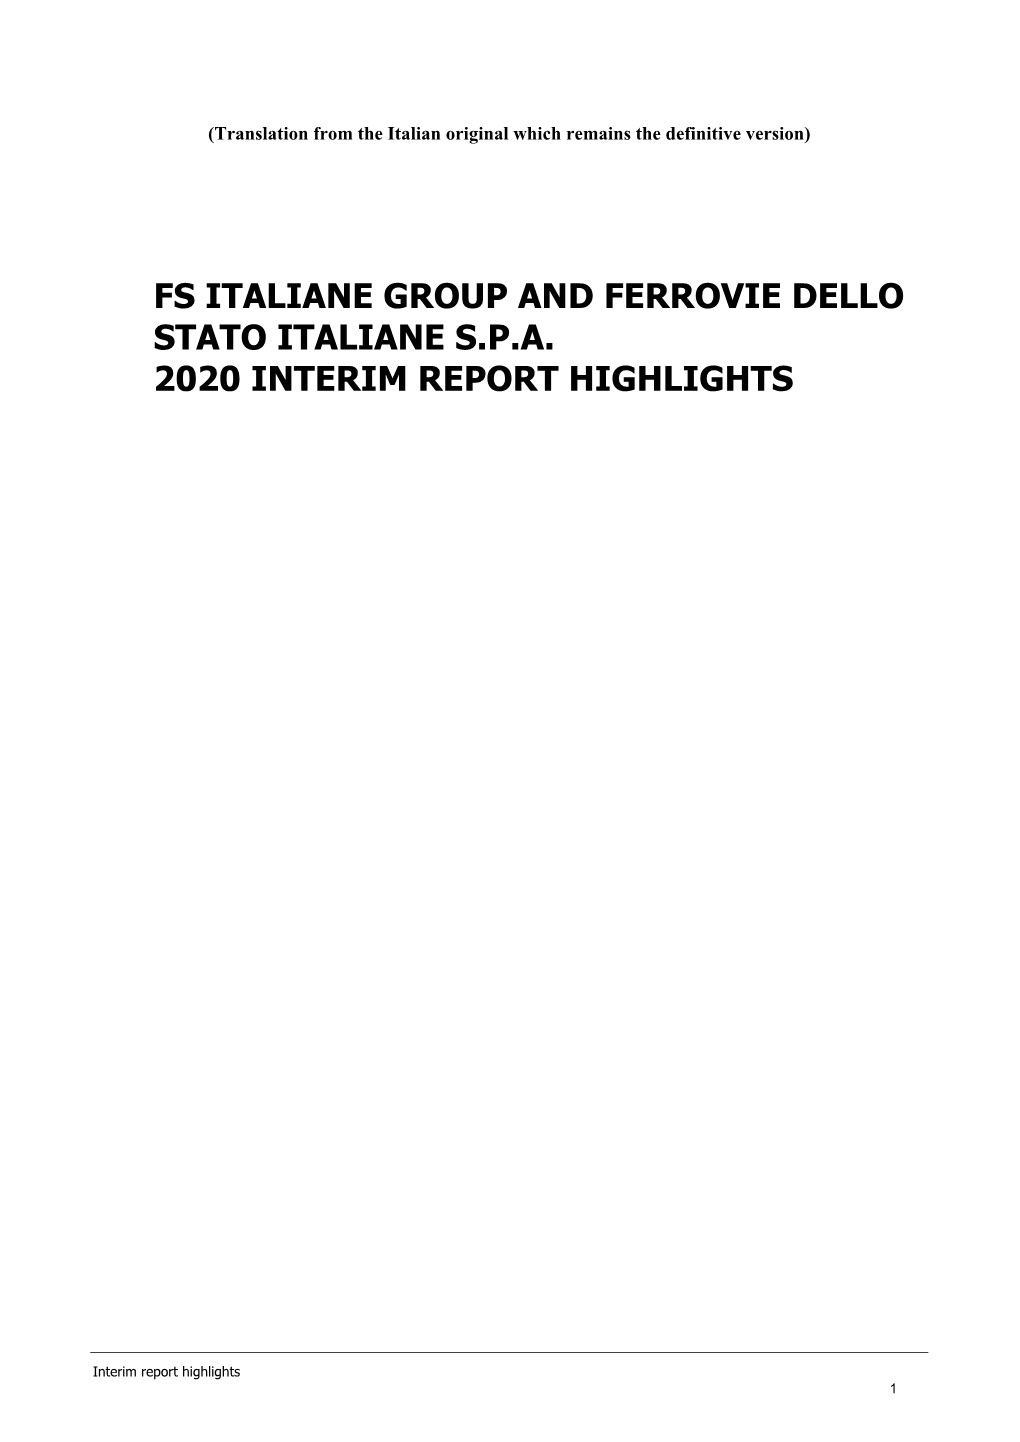 2020 Interim Report Highlights(.Pdf — 2974